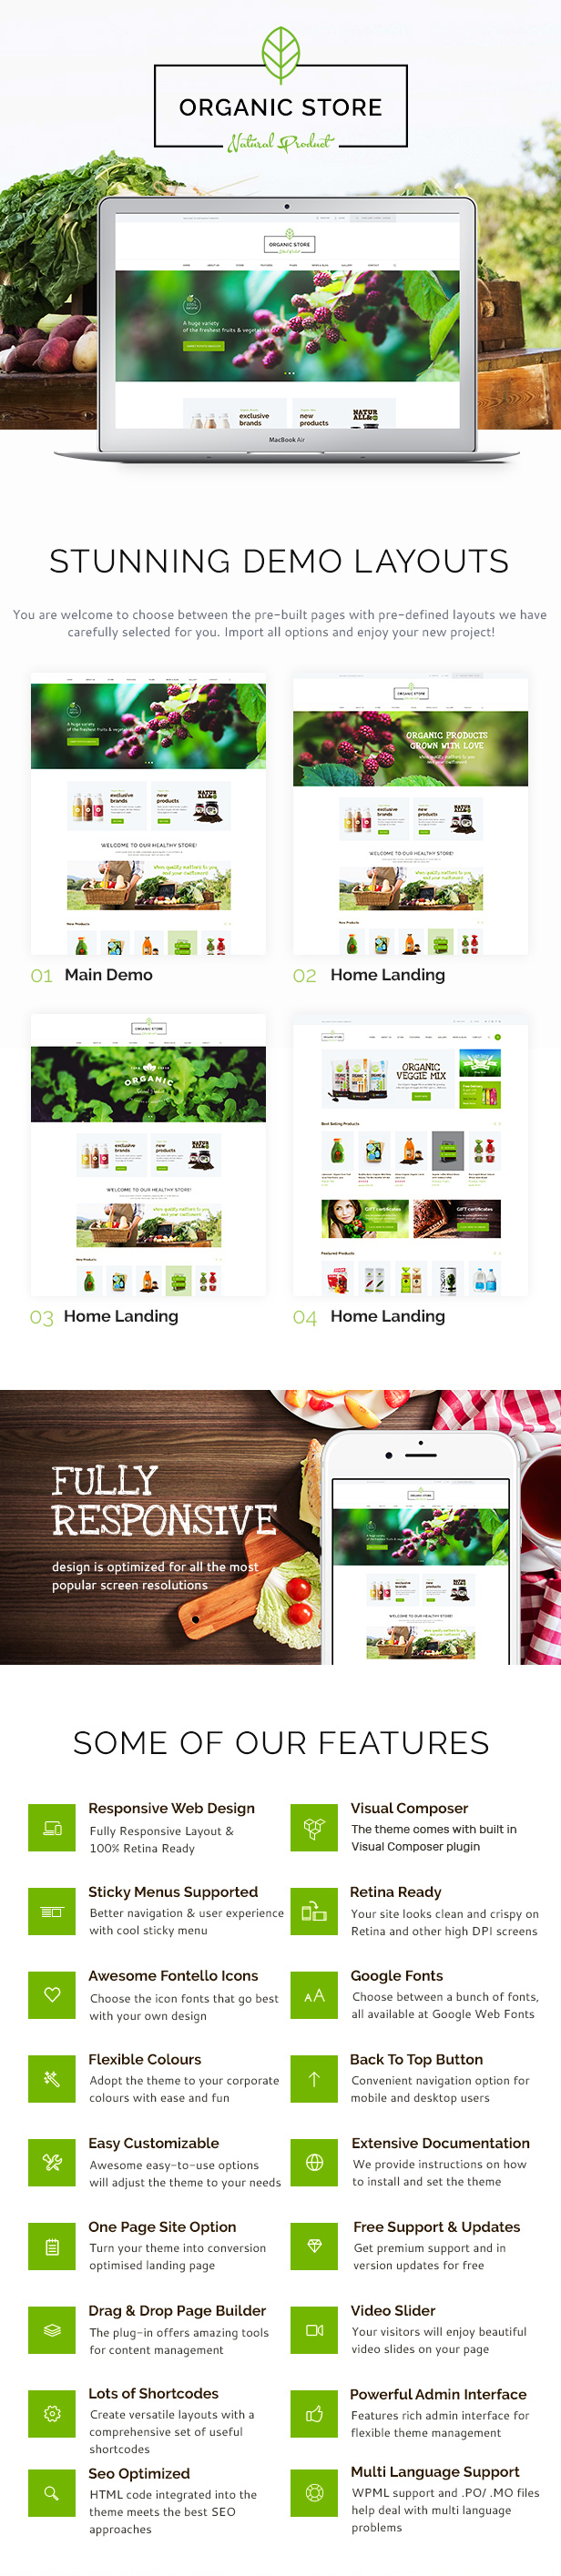 dscr organic 1 - Organic Store | Eco Products Shop WordPress Theme + RTL